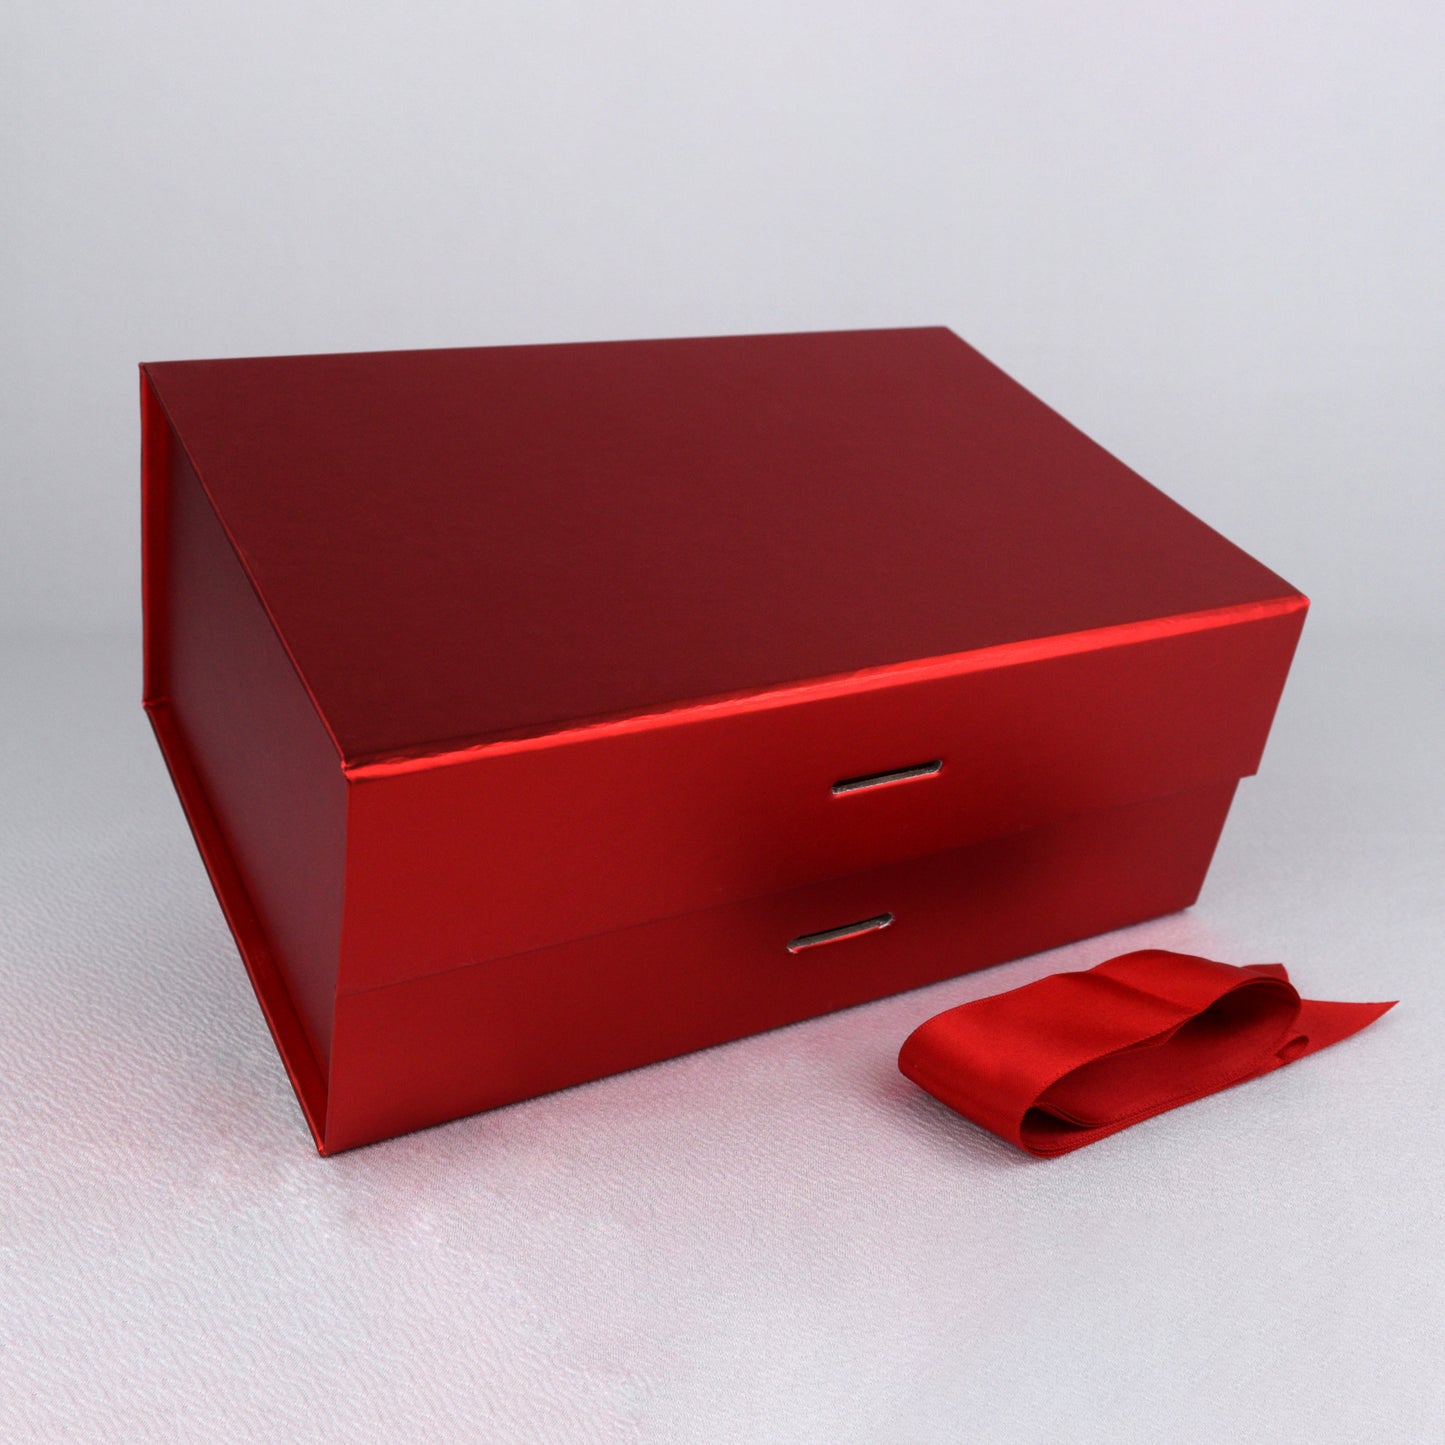 MEDIUM-LARGE Premium Gift Box with Removable Ribbon & Magnetic Closure (9.25" x 6.75" x 4")